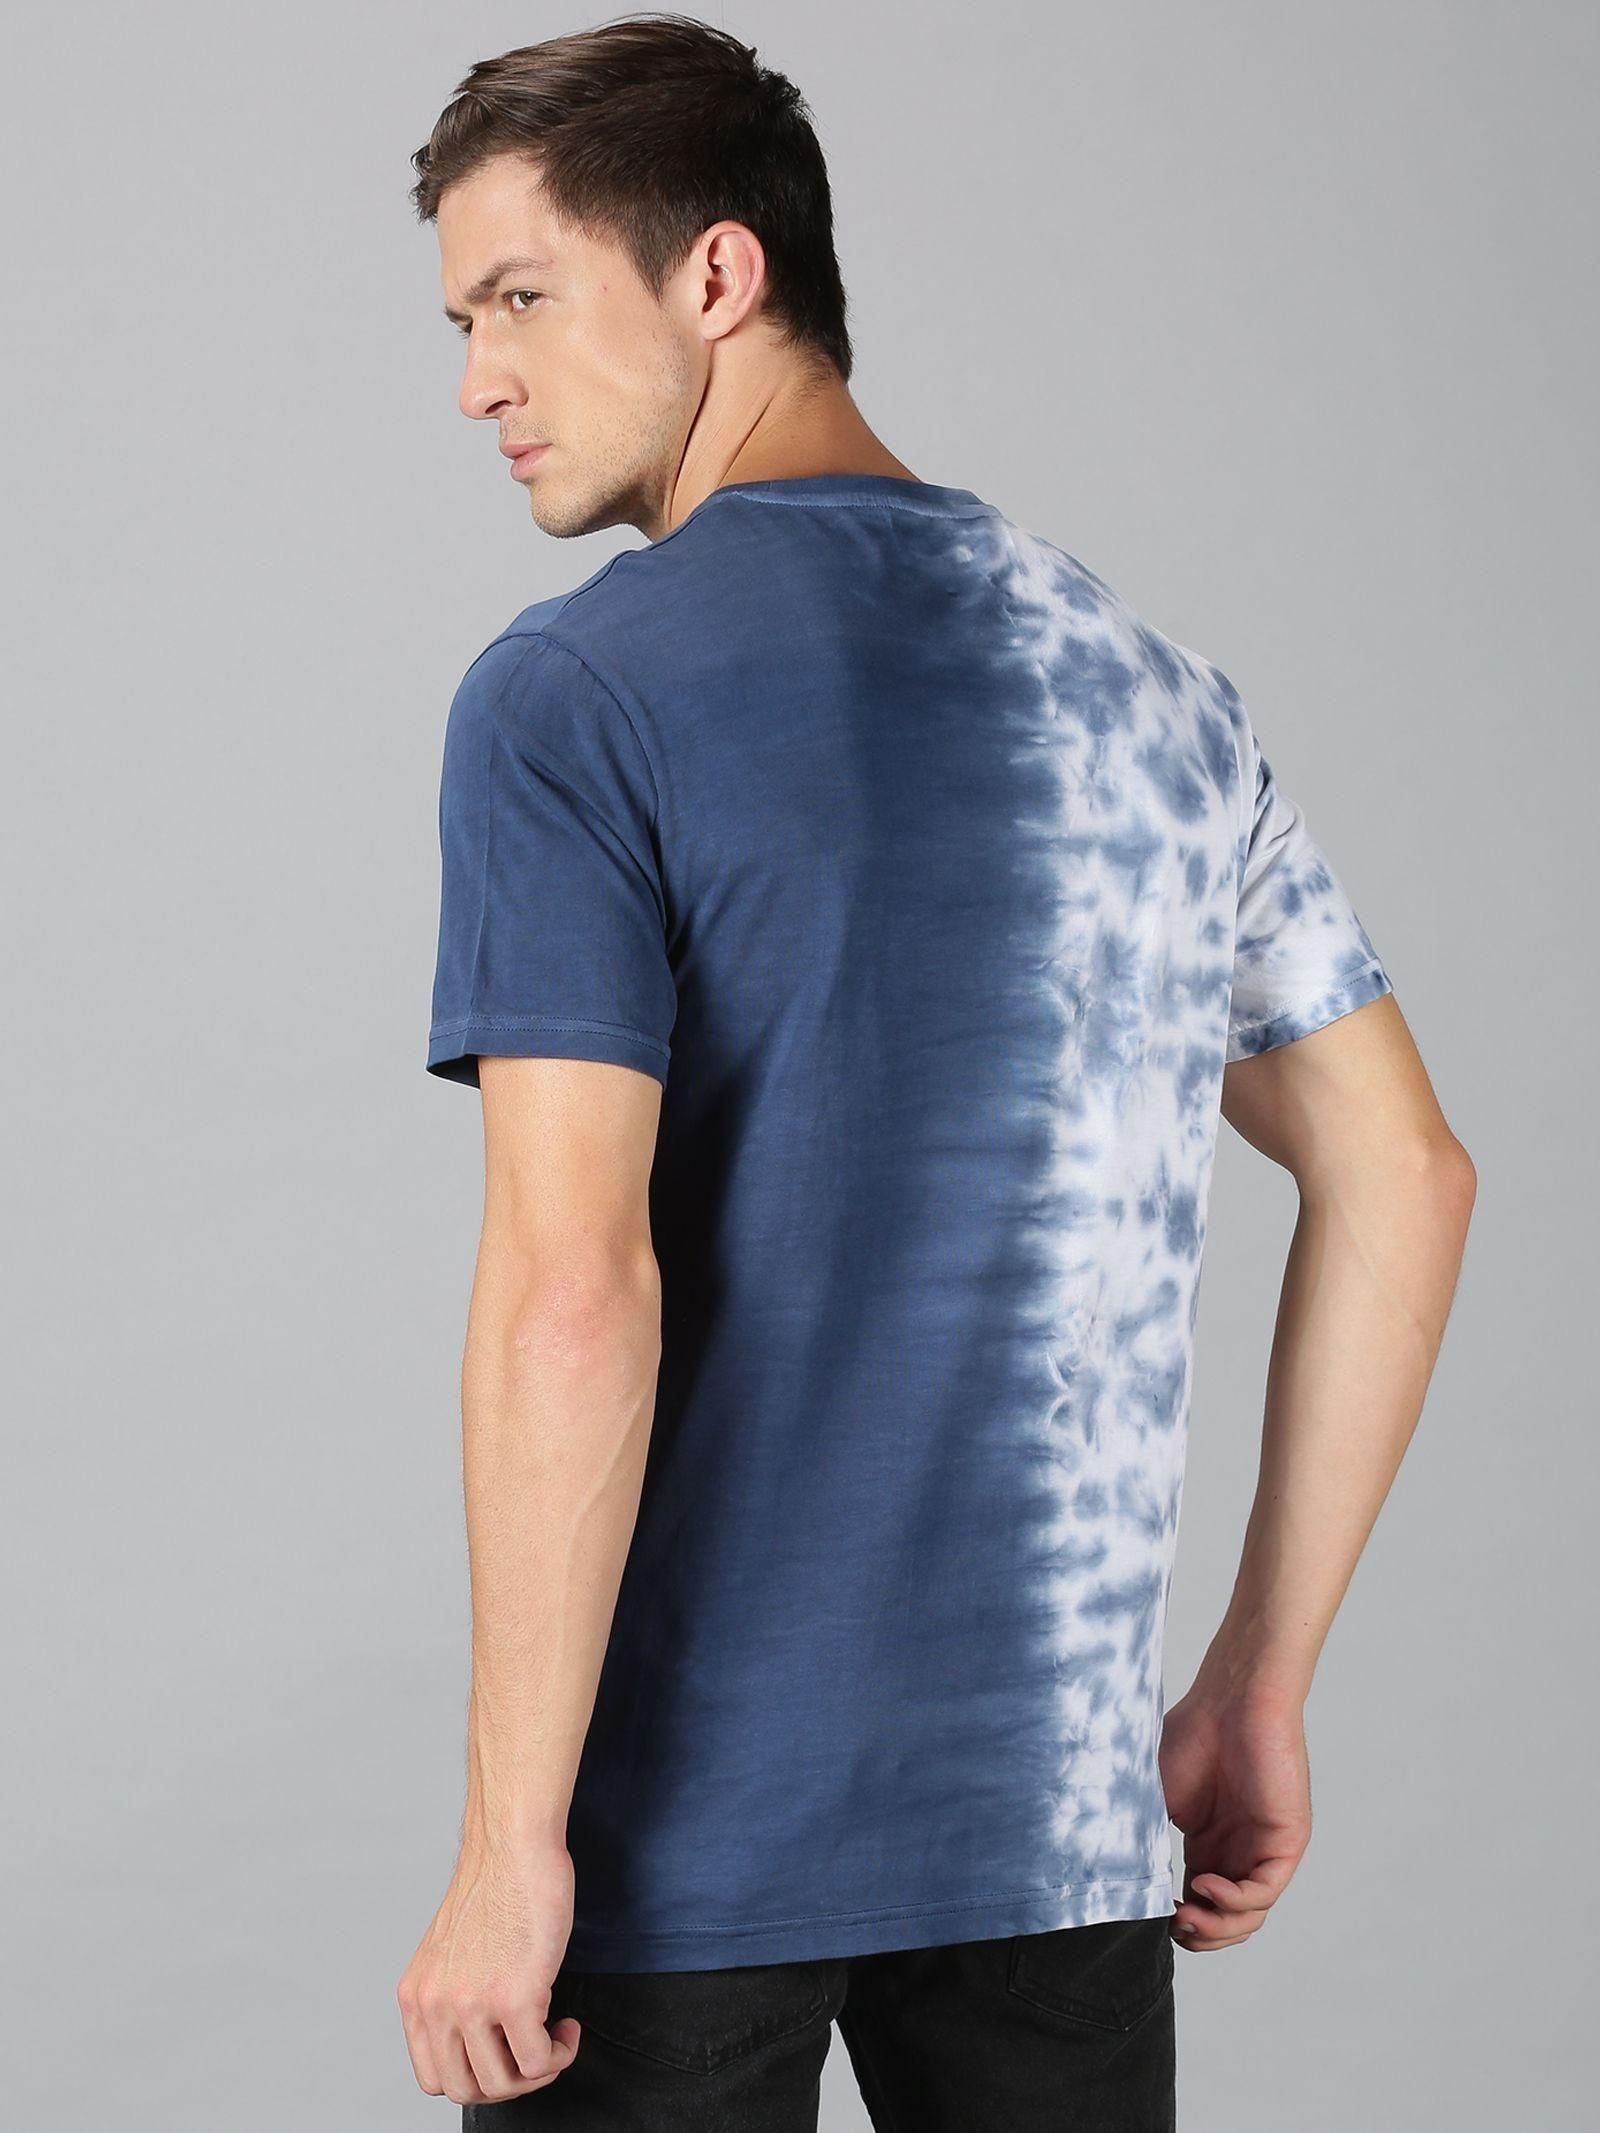 UrGear Cotton Dyed Half Sleeves Round Neck Mens T-Shirt